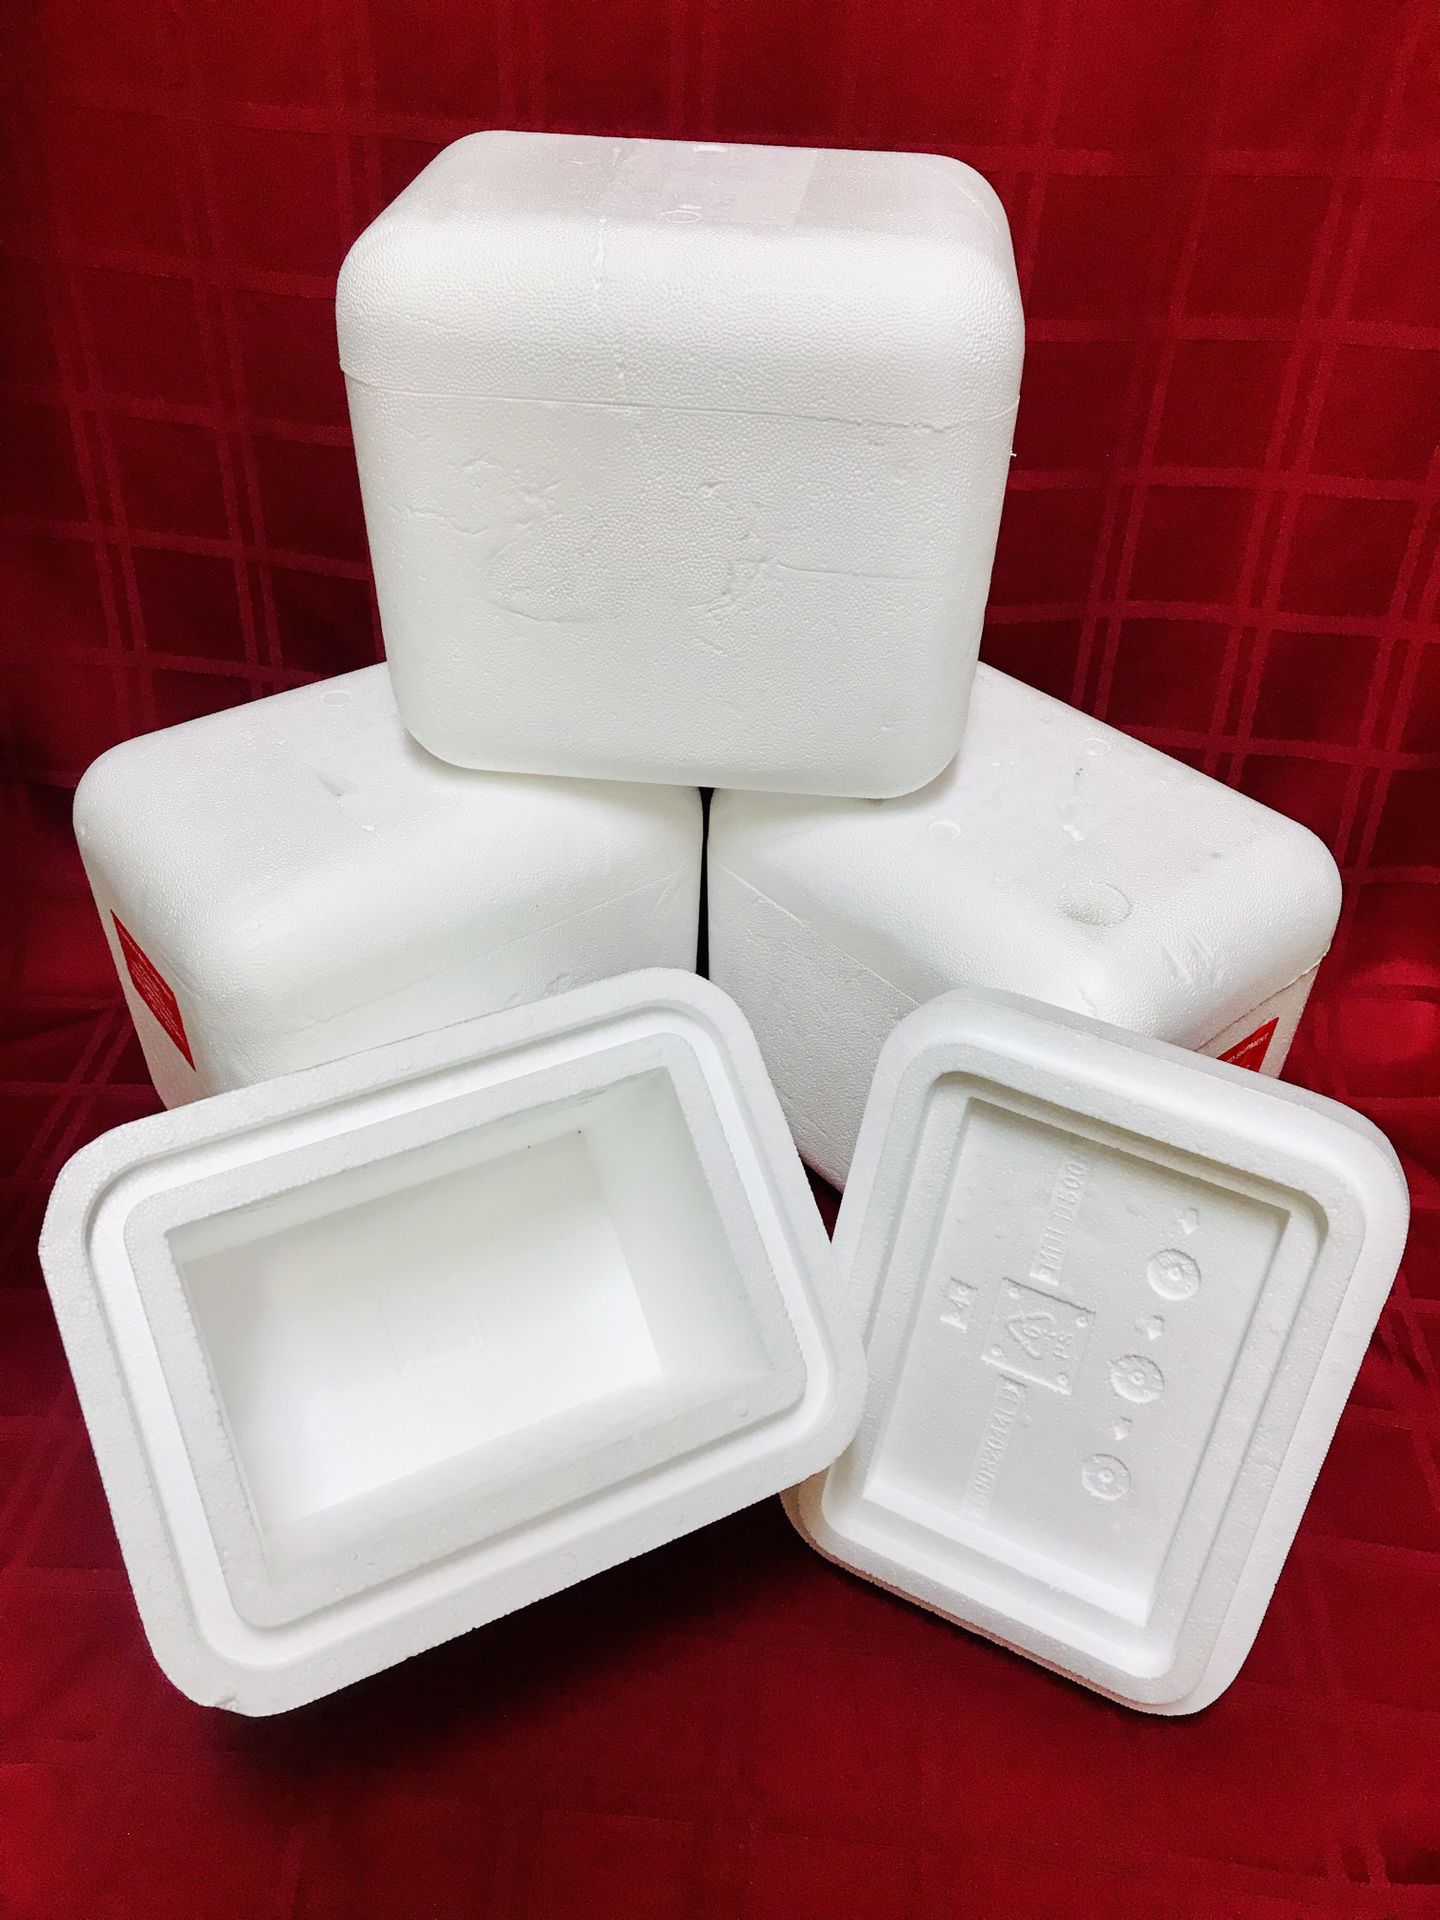 4-Styrofoam Insulated Shipping Cooler Box 13 3/4” x 10 1/4" x 12 1/4”